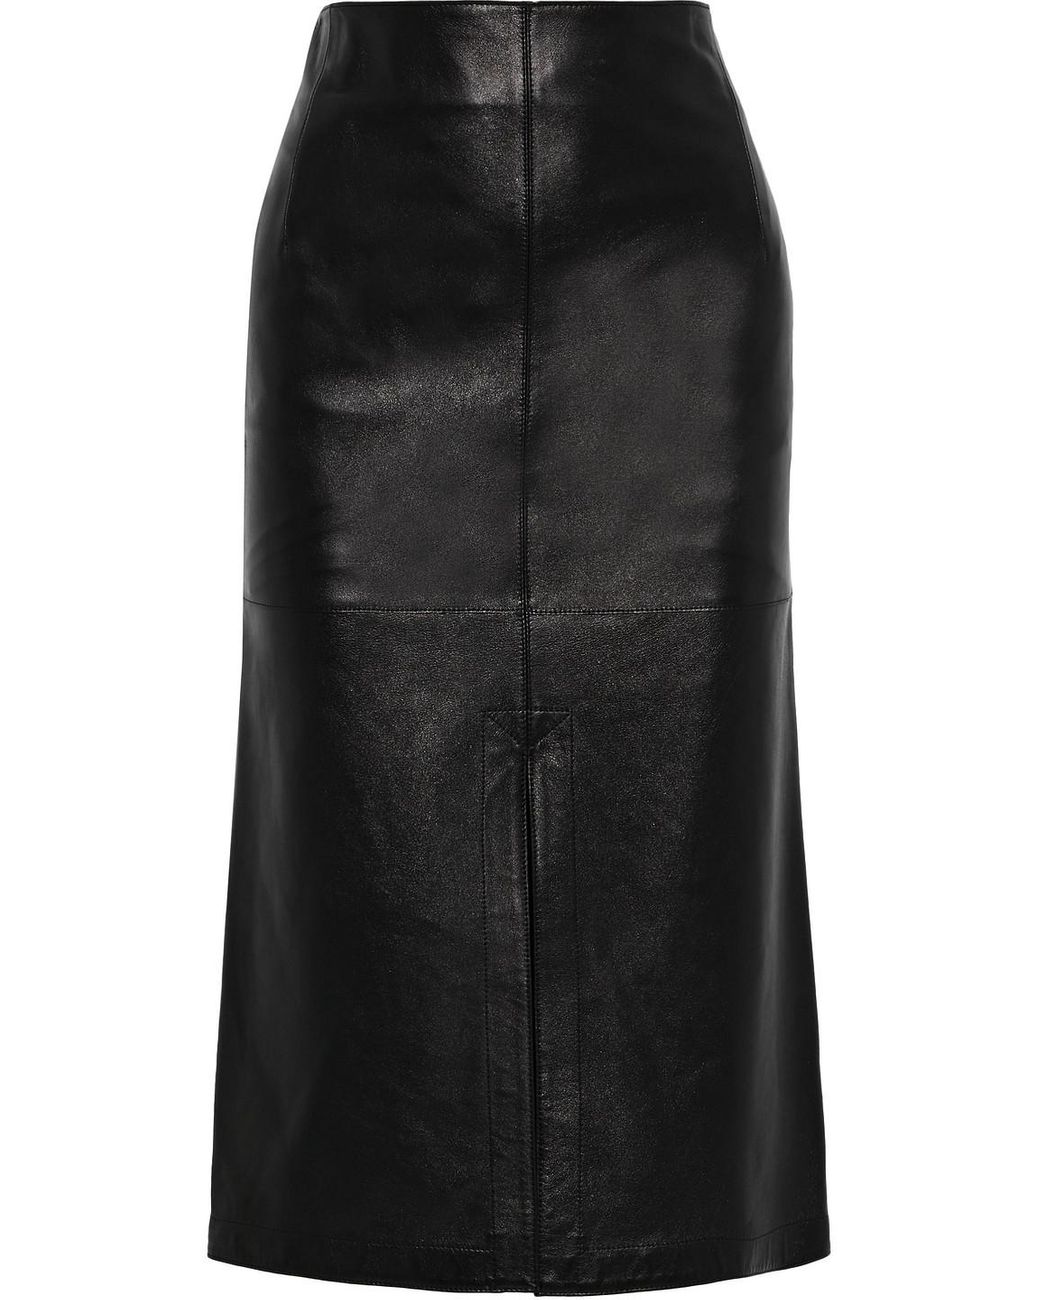 Victoria Beckham Leather Midi Skirt in Black - Lyst